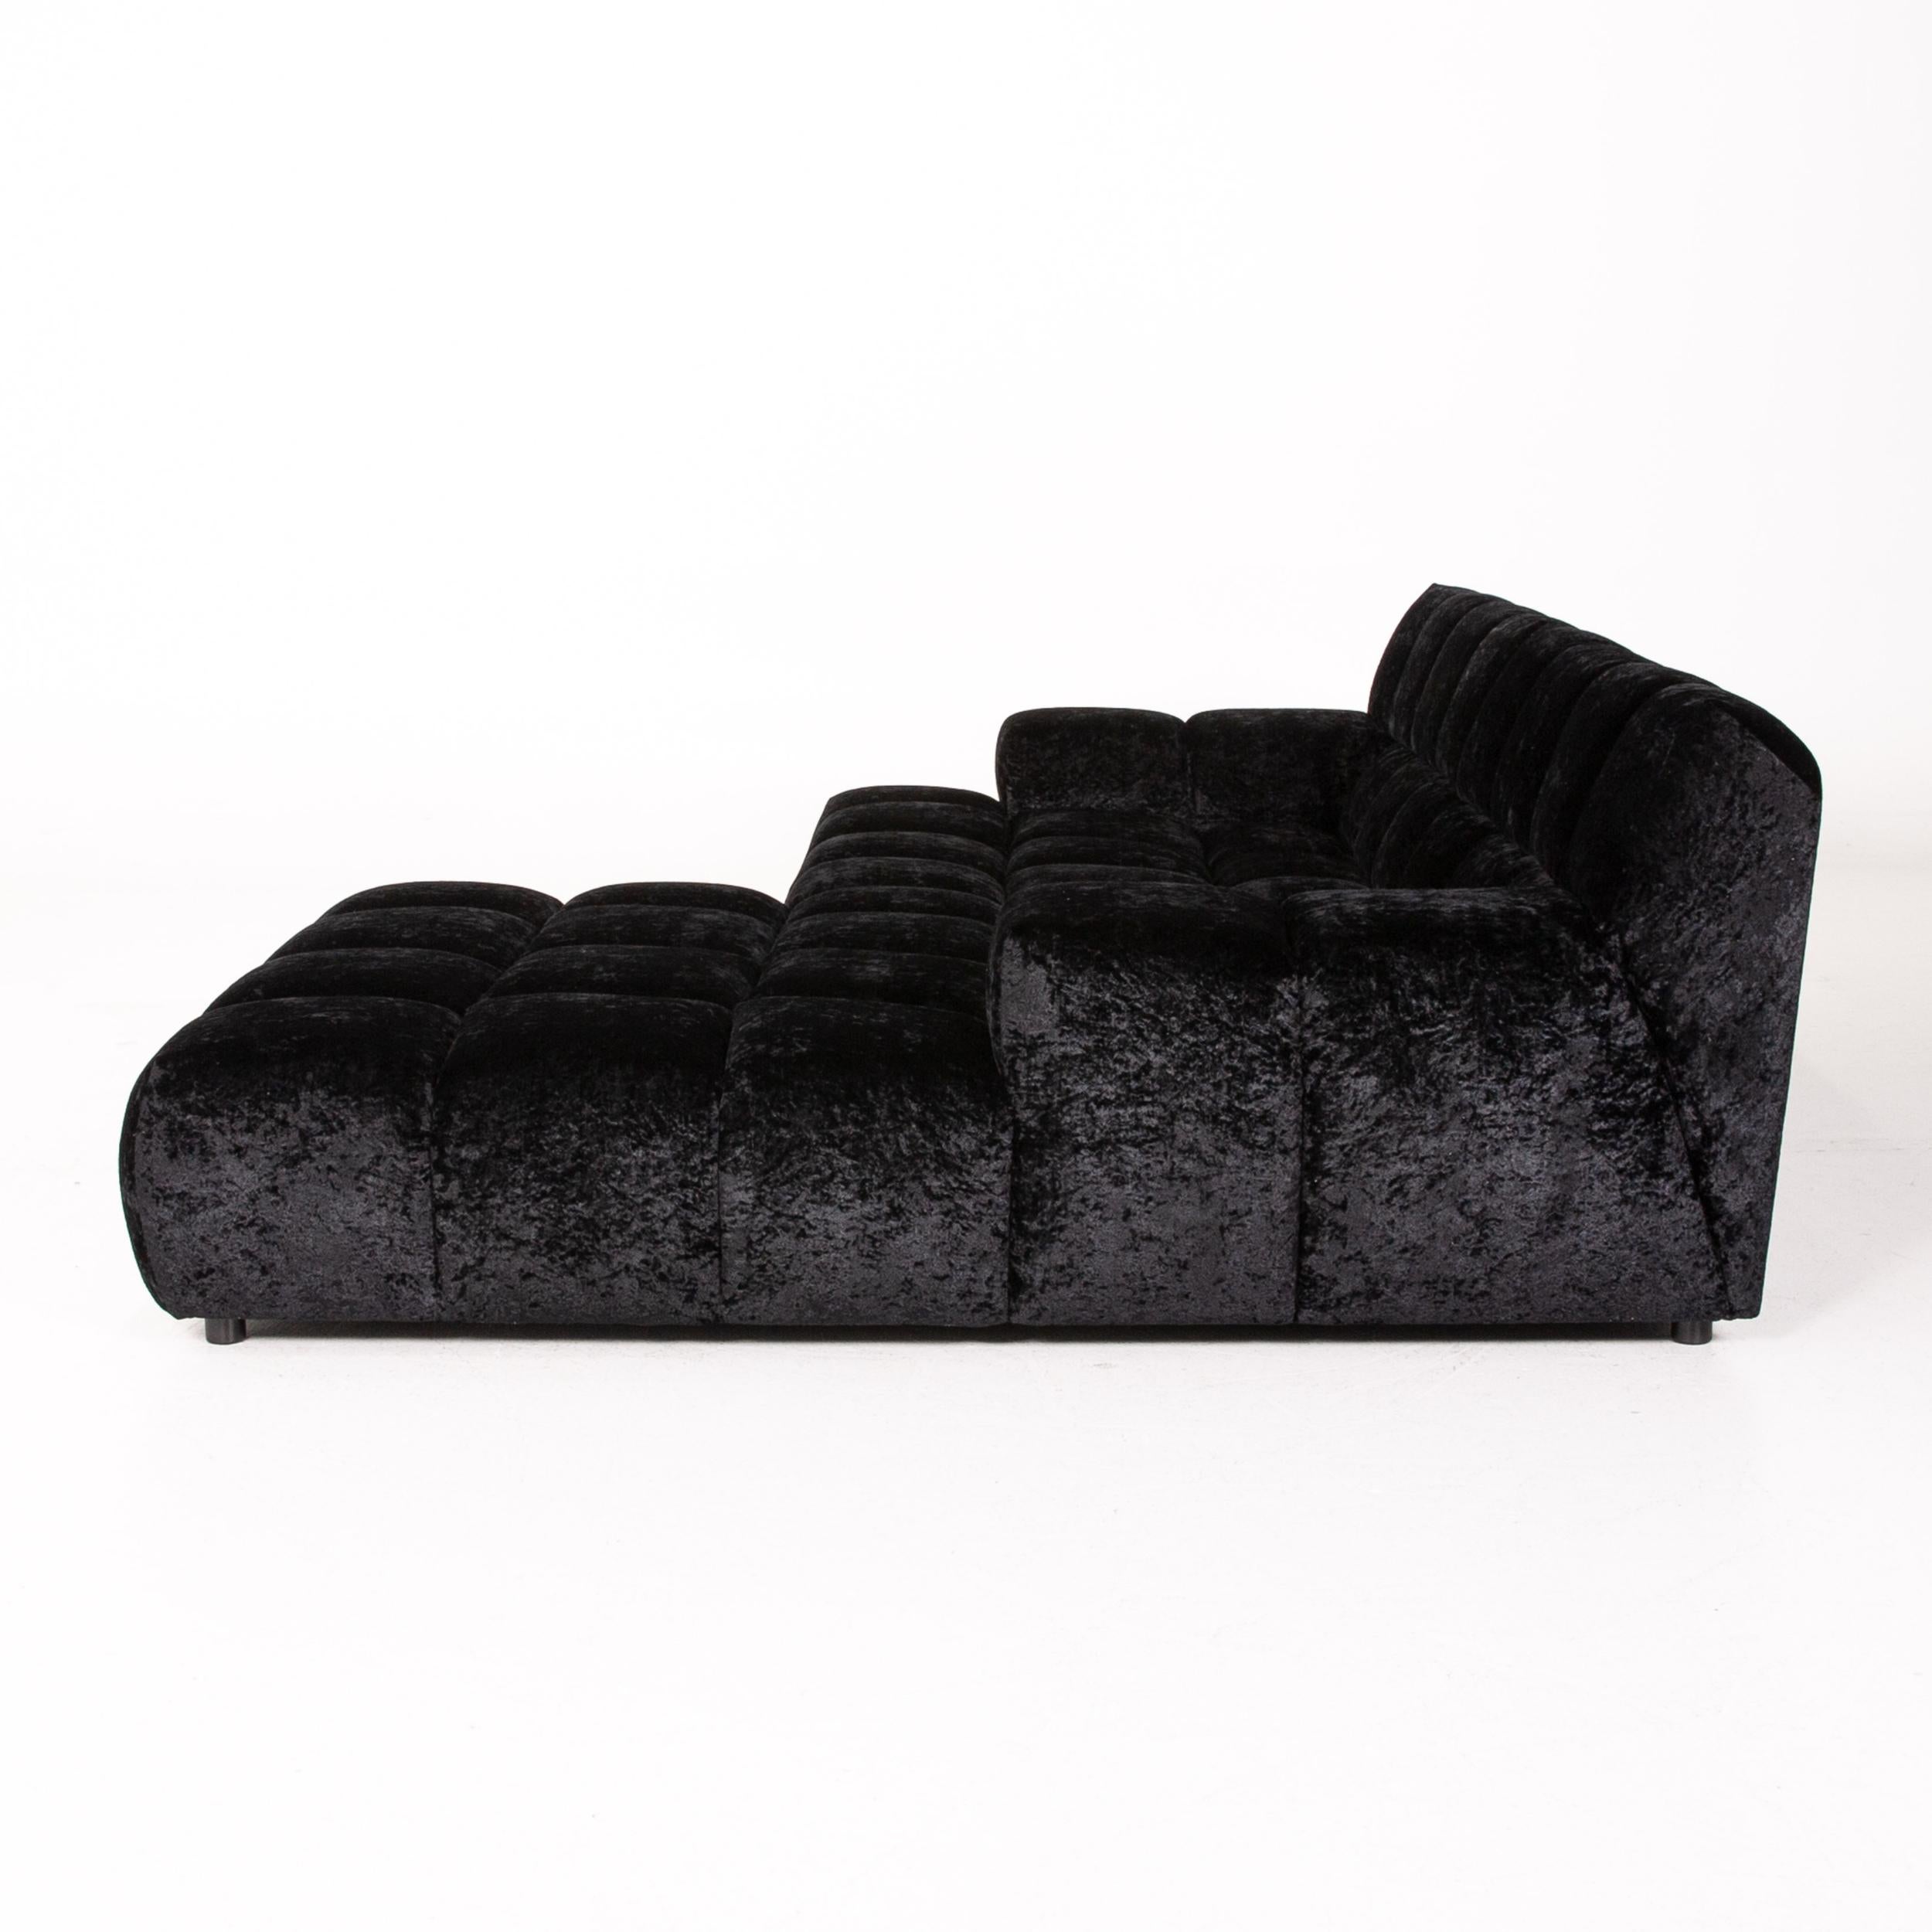 Bretz Ocean 7 Velvet Fabric Corner Sofa Black Sofa Couch Modular 4